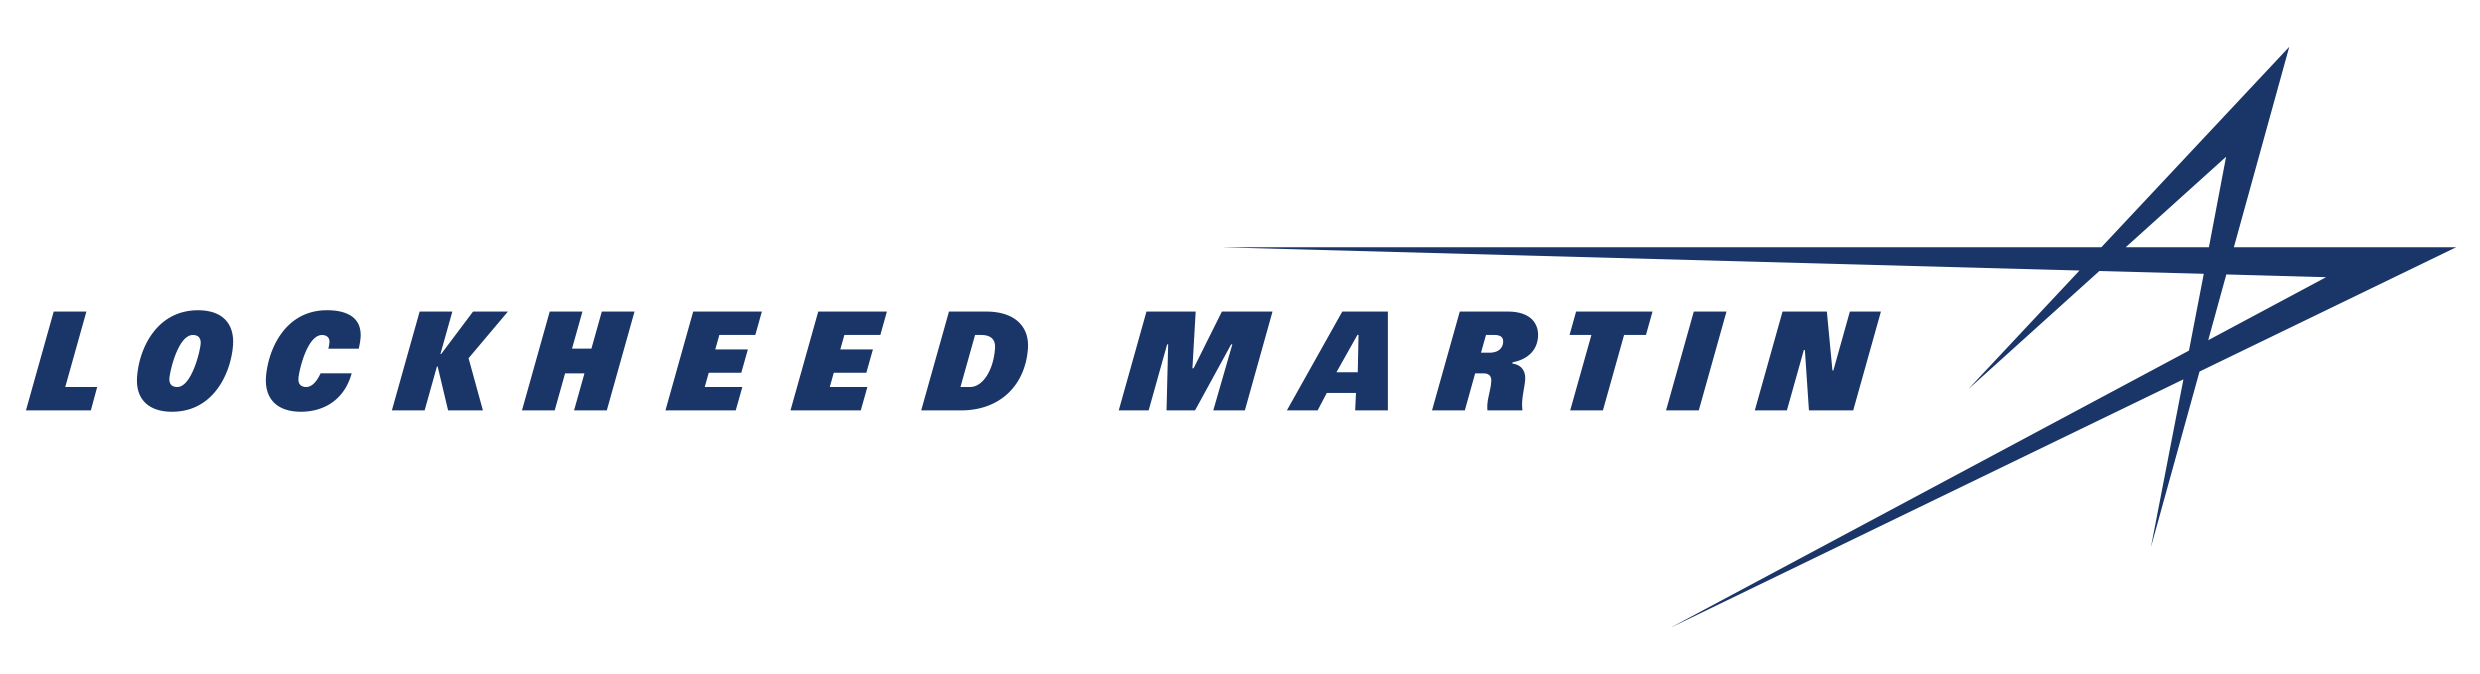 Northrop Grumman Logo - Lockheed Martin Corporation | Lockheed Martin